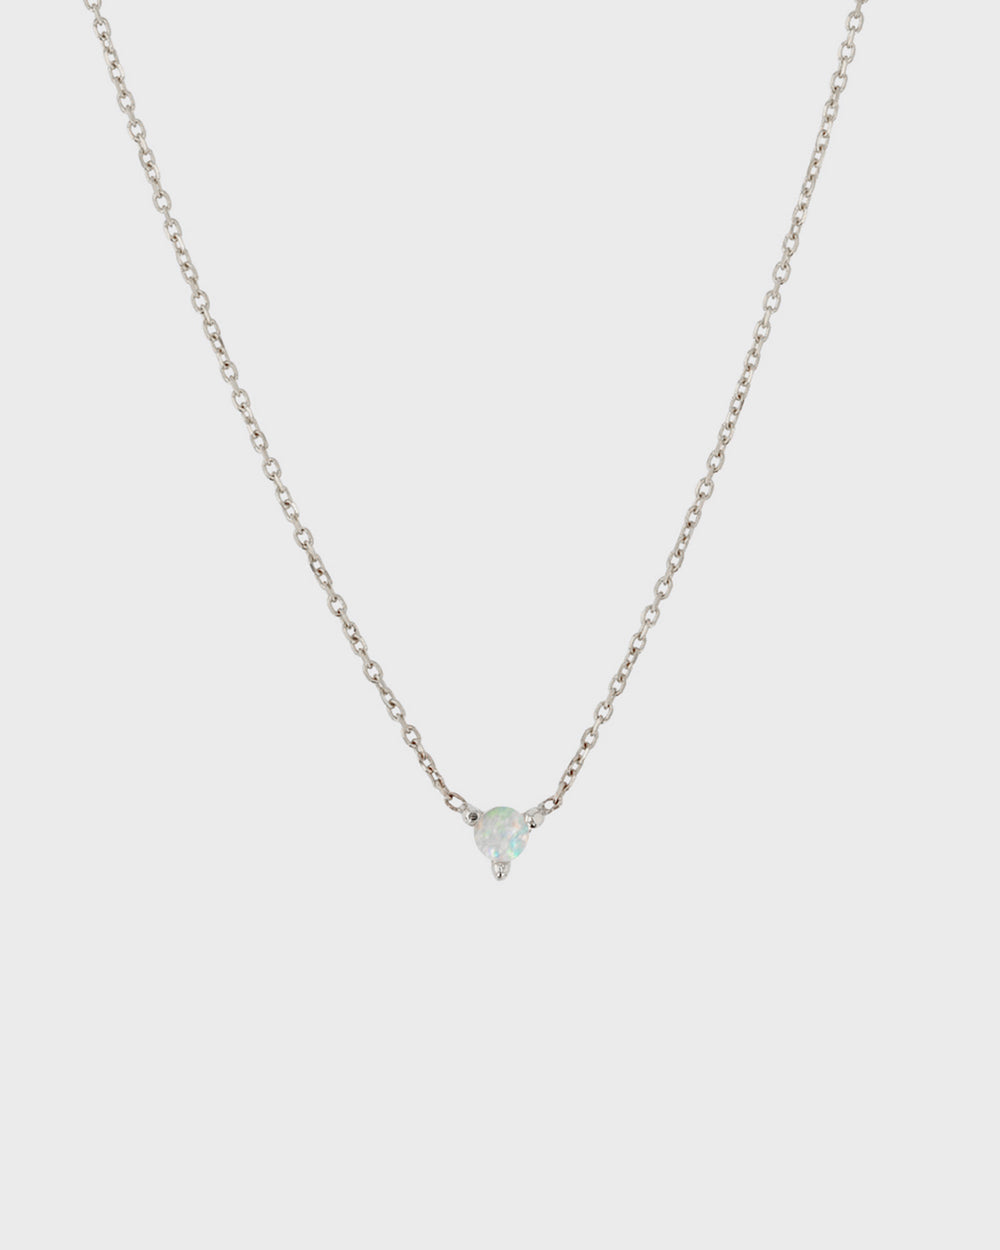 The Petite Opal Birthstone Necklace by Sarah & Sebastian